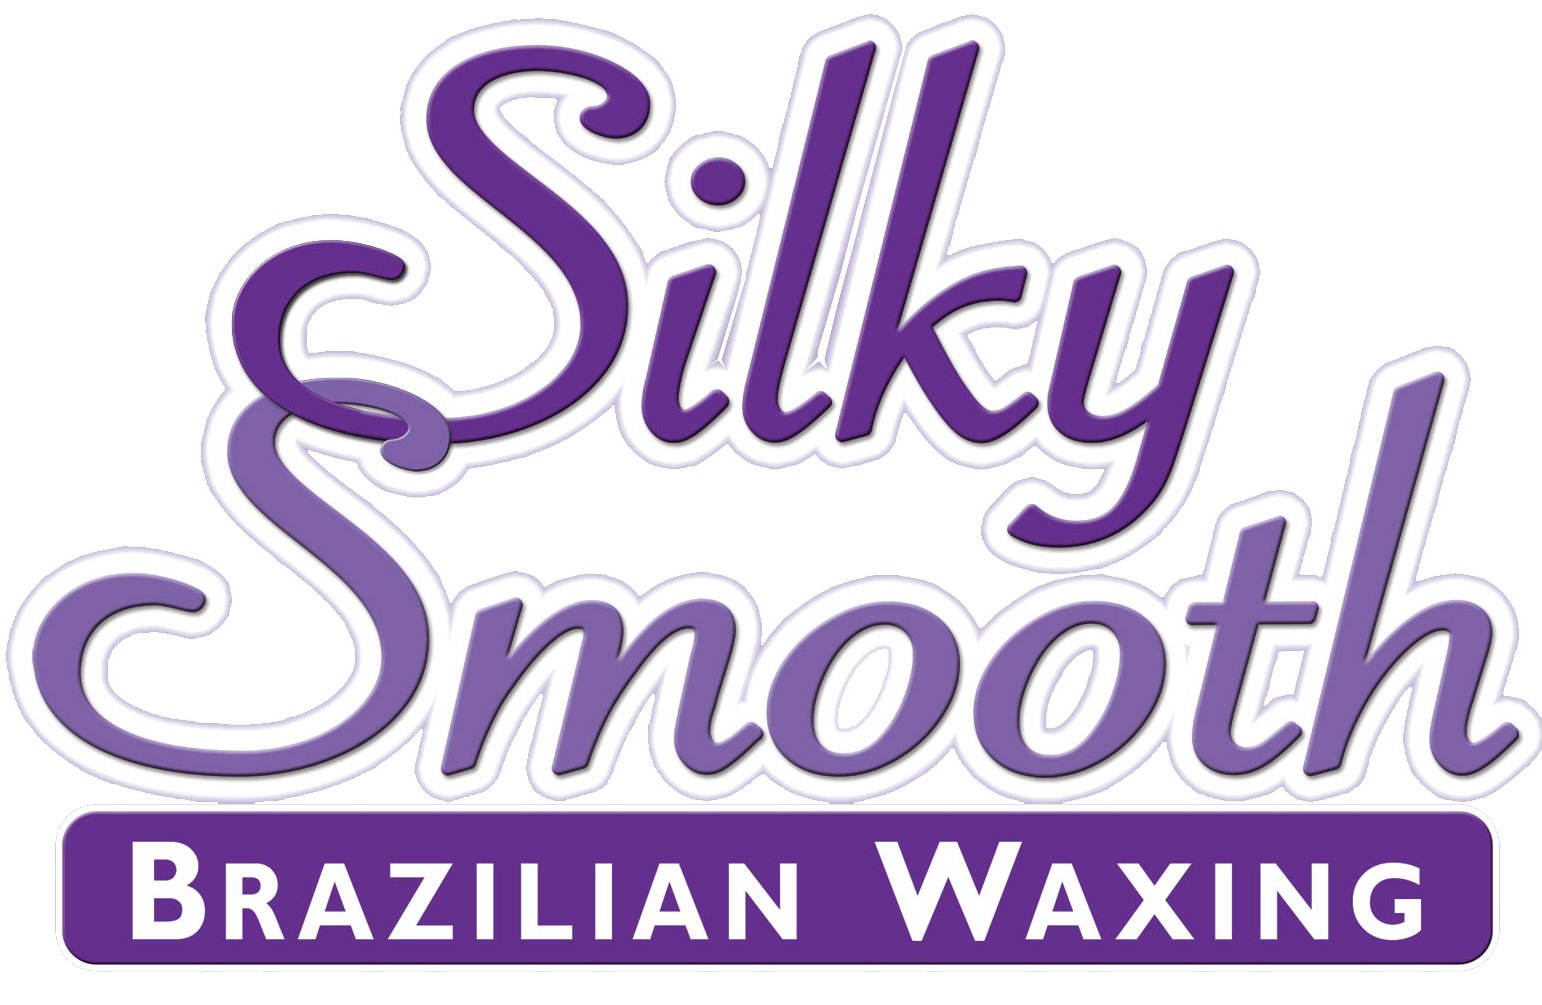 Silky Smooth